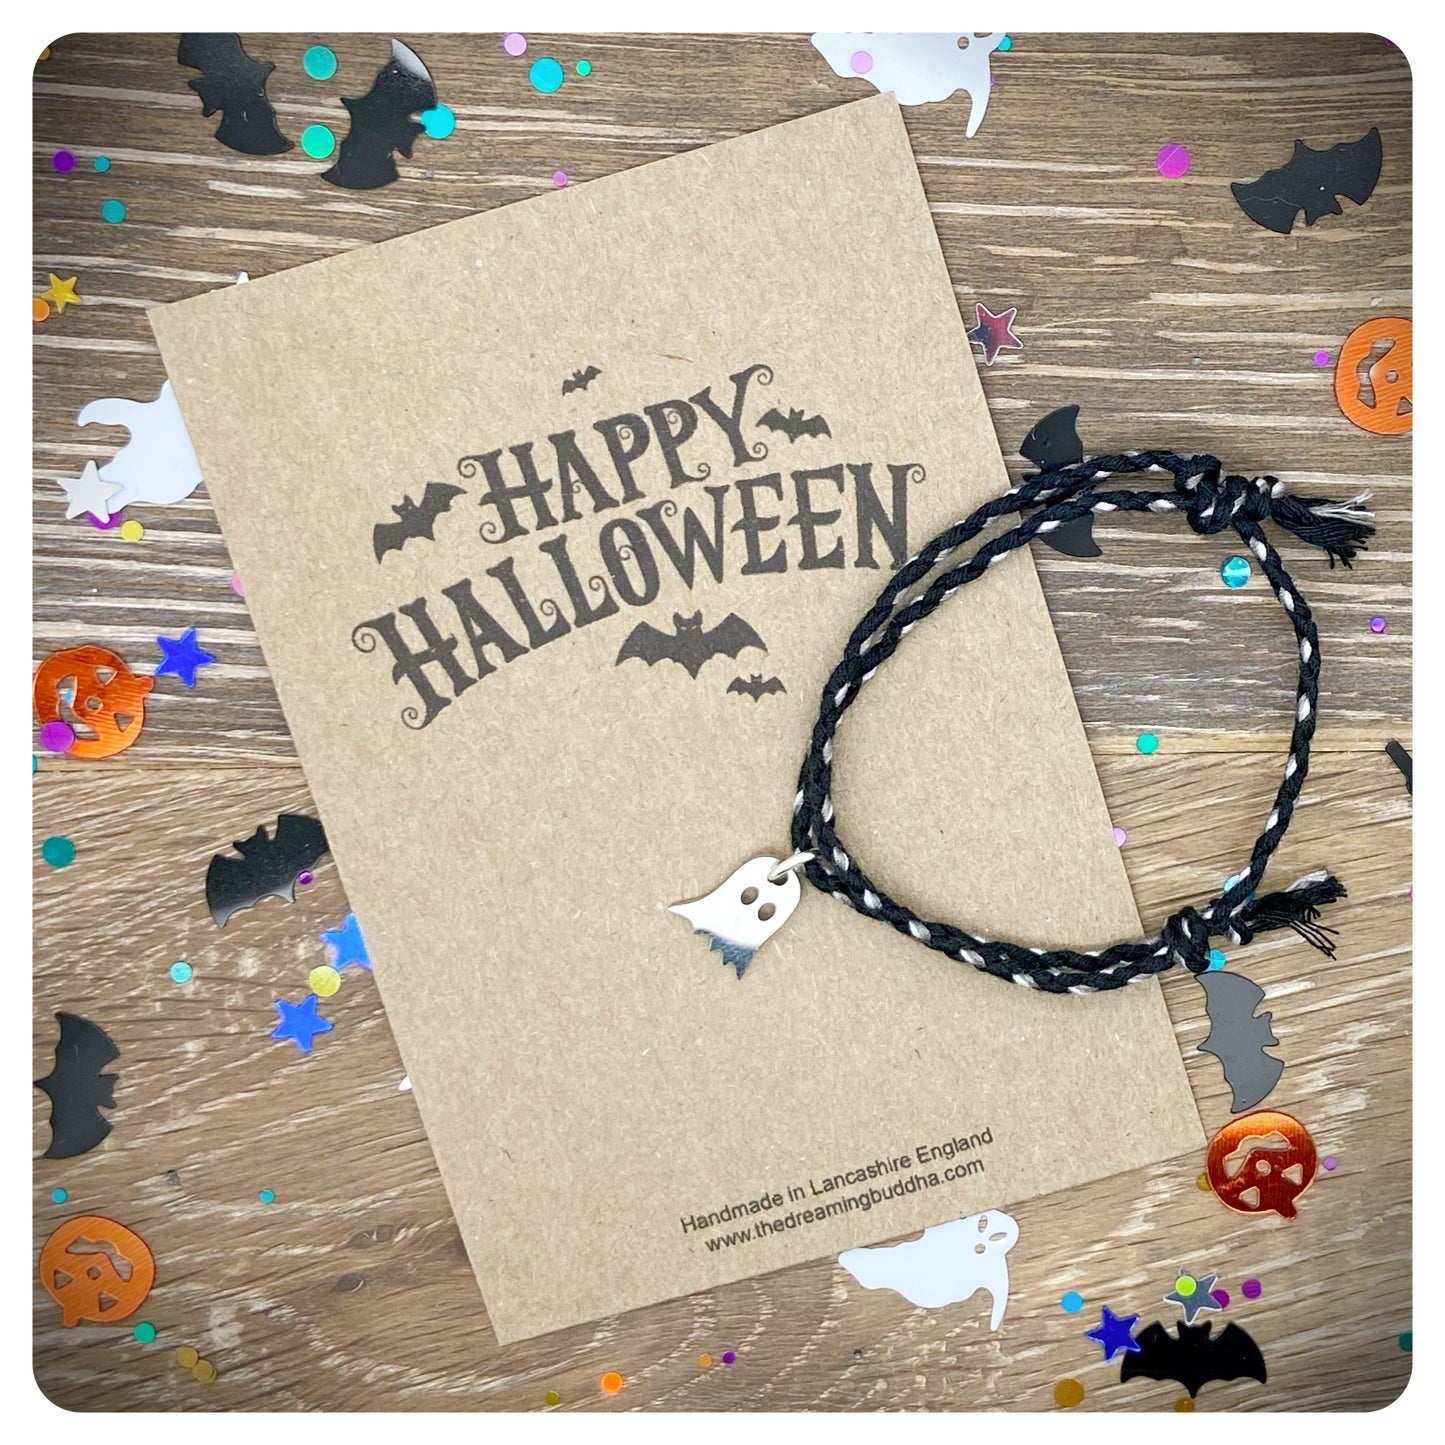 Halloween Ghost Bracelet, Spooky Braided Jewellery, Woven Plaited Friendship Gift